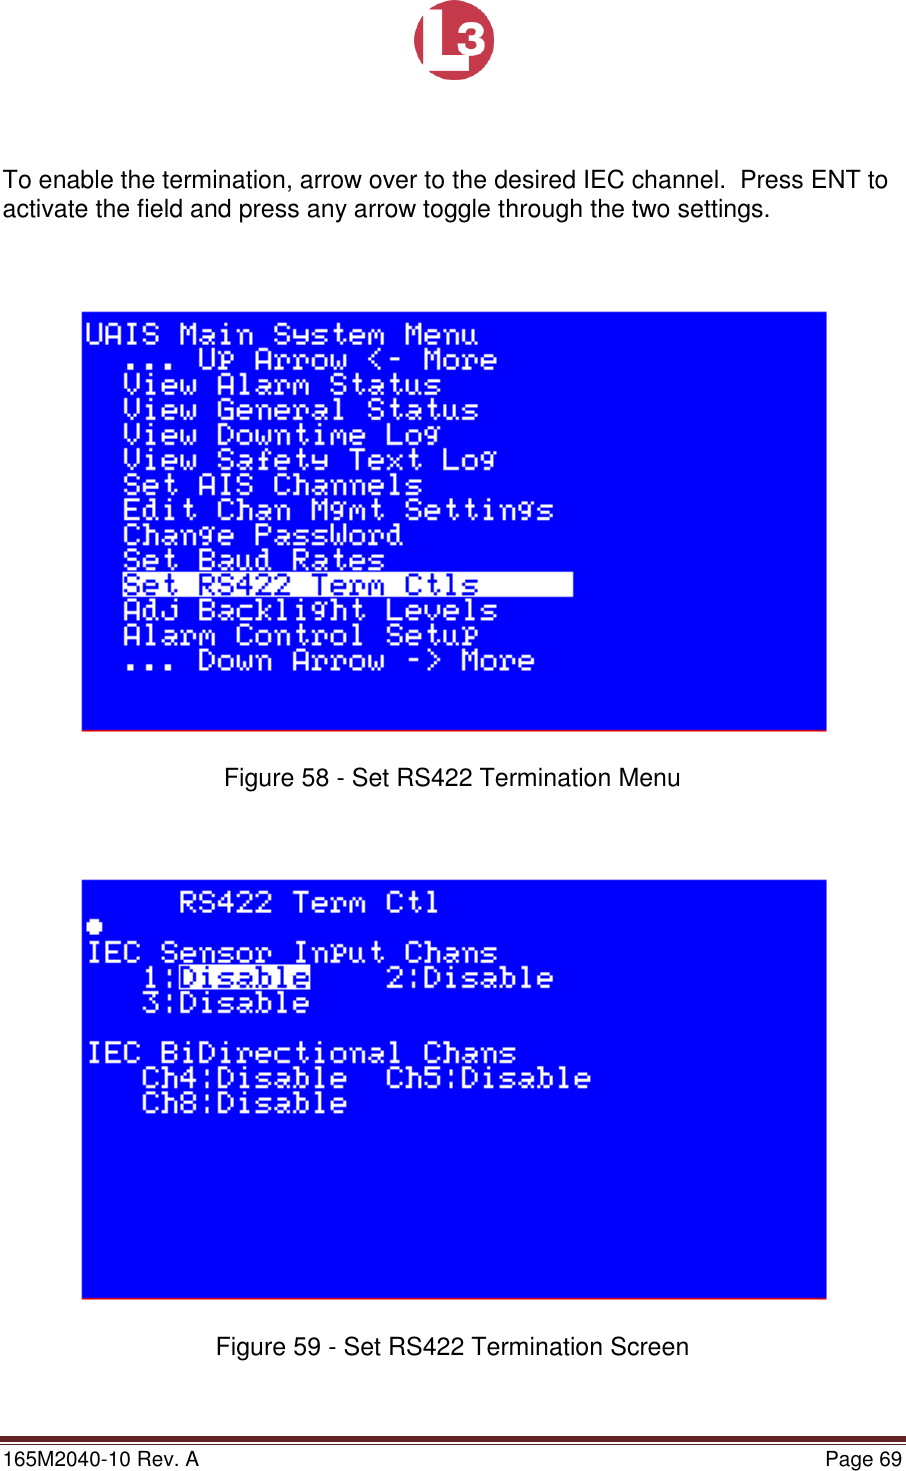 Page 69 of L3 Technologies AISA6 Shipboard Mobile AIS User Manual Memory Verification Procedure